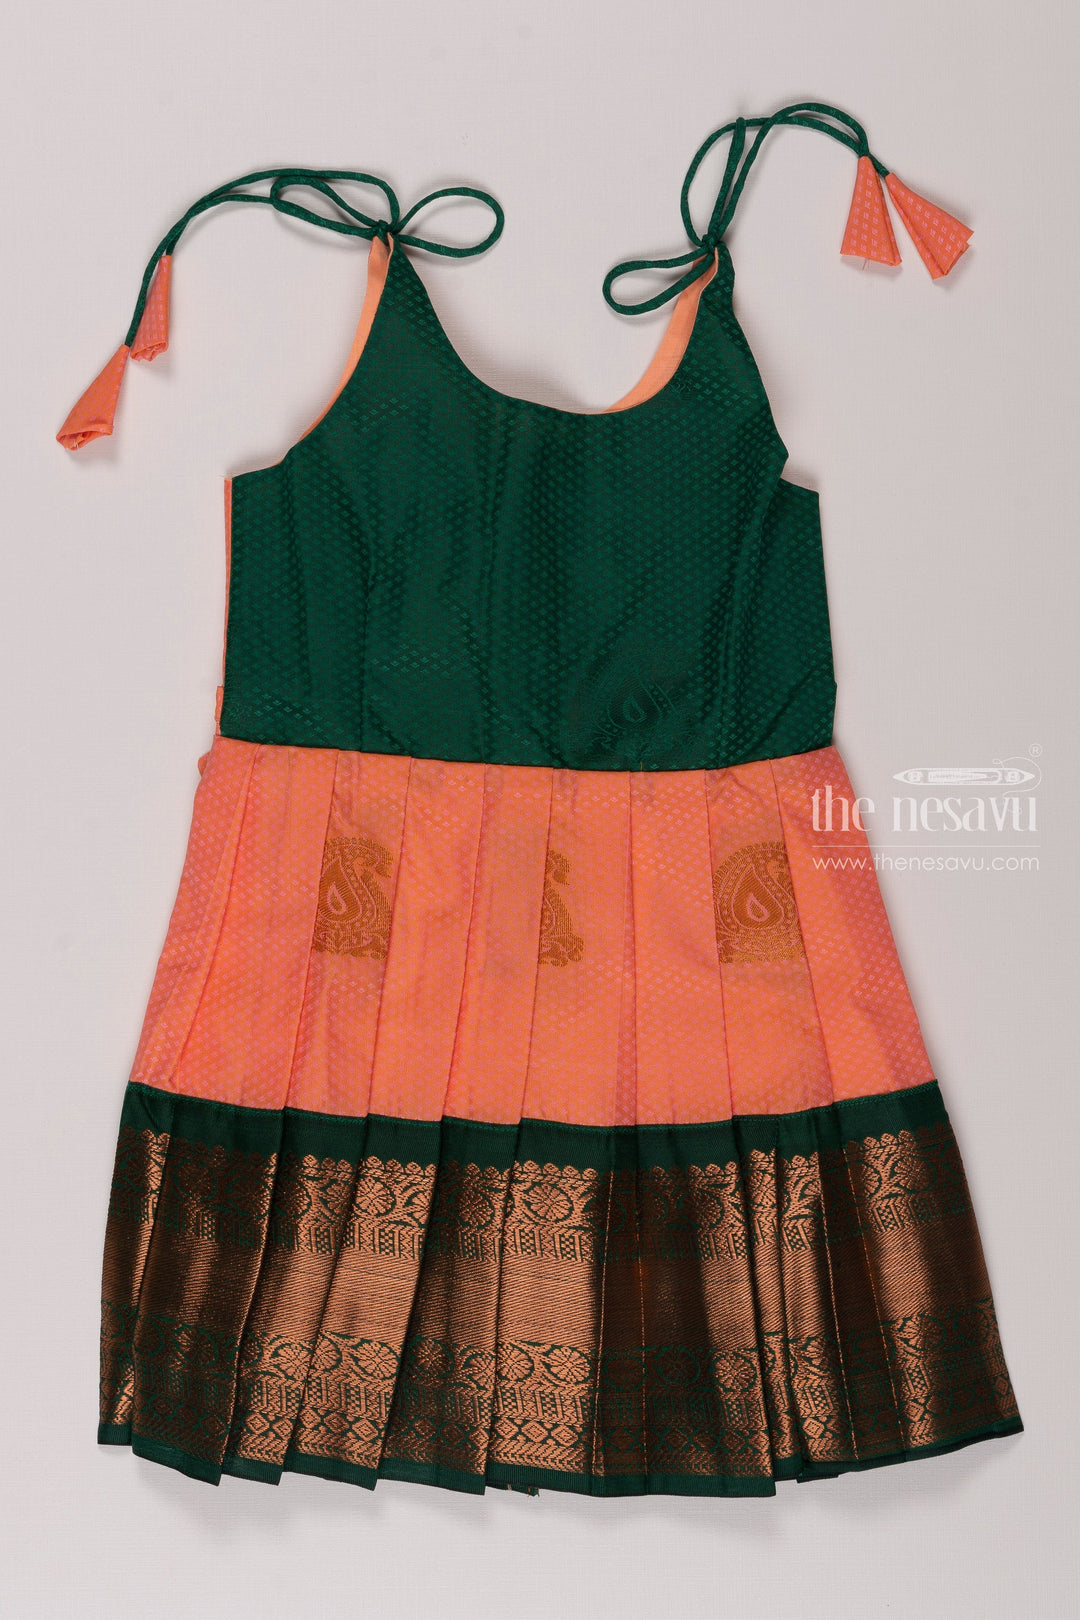 The Nesavu Tie-up Frock Girls Silk TieUp Ethnic Frock - Boutique Style Elegance Nesavu 16 (1Y) / Pink / Style 4 T343D-16 Trendy Silk Tie Up Frock for Girls | Floral Print Ethnic Dress | The Nesavu